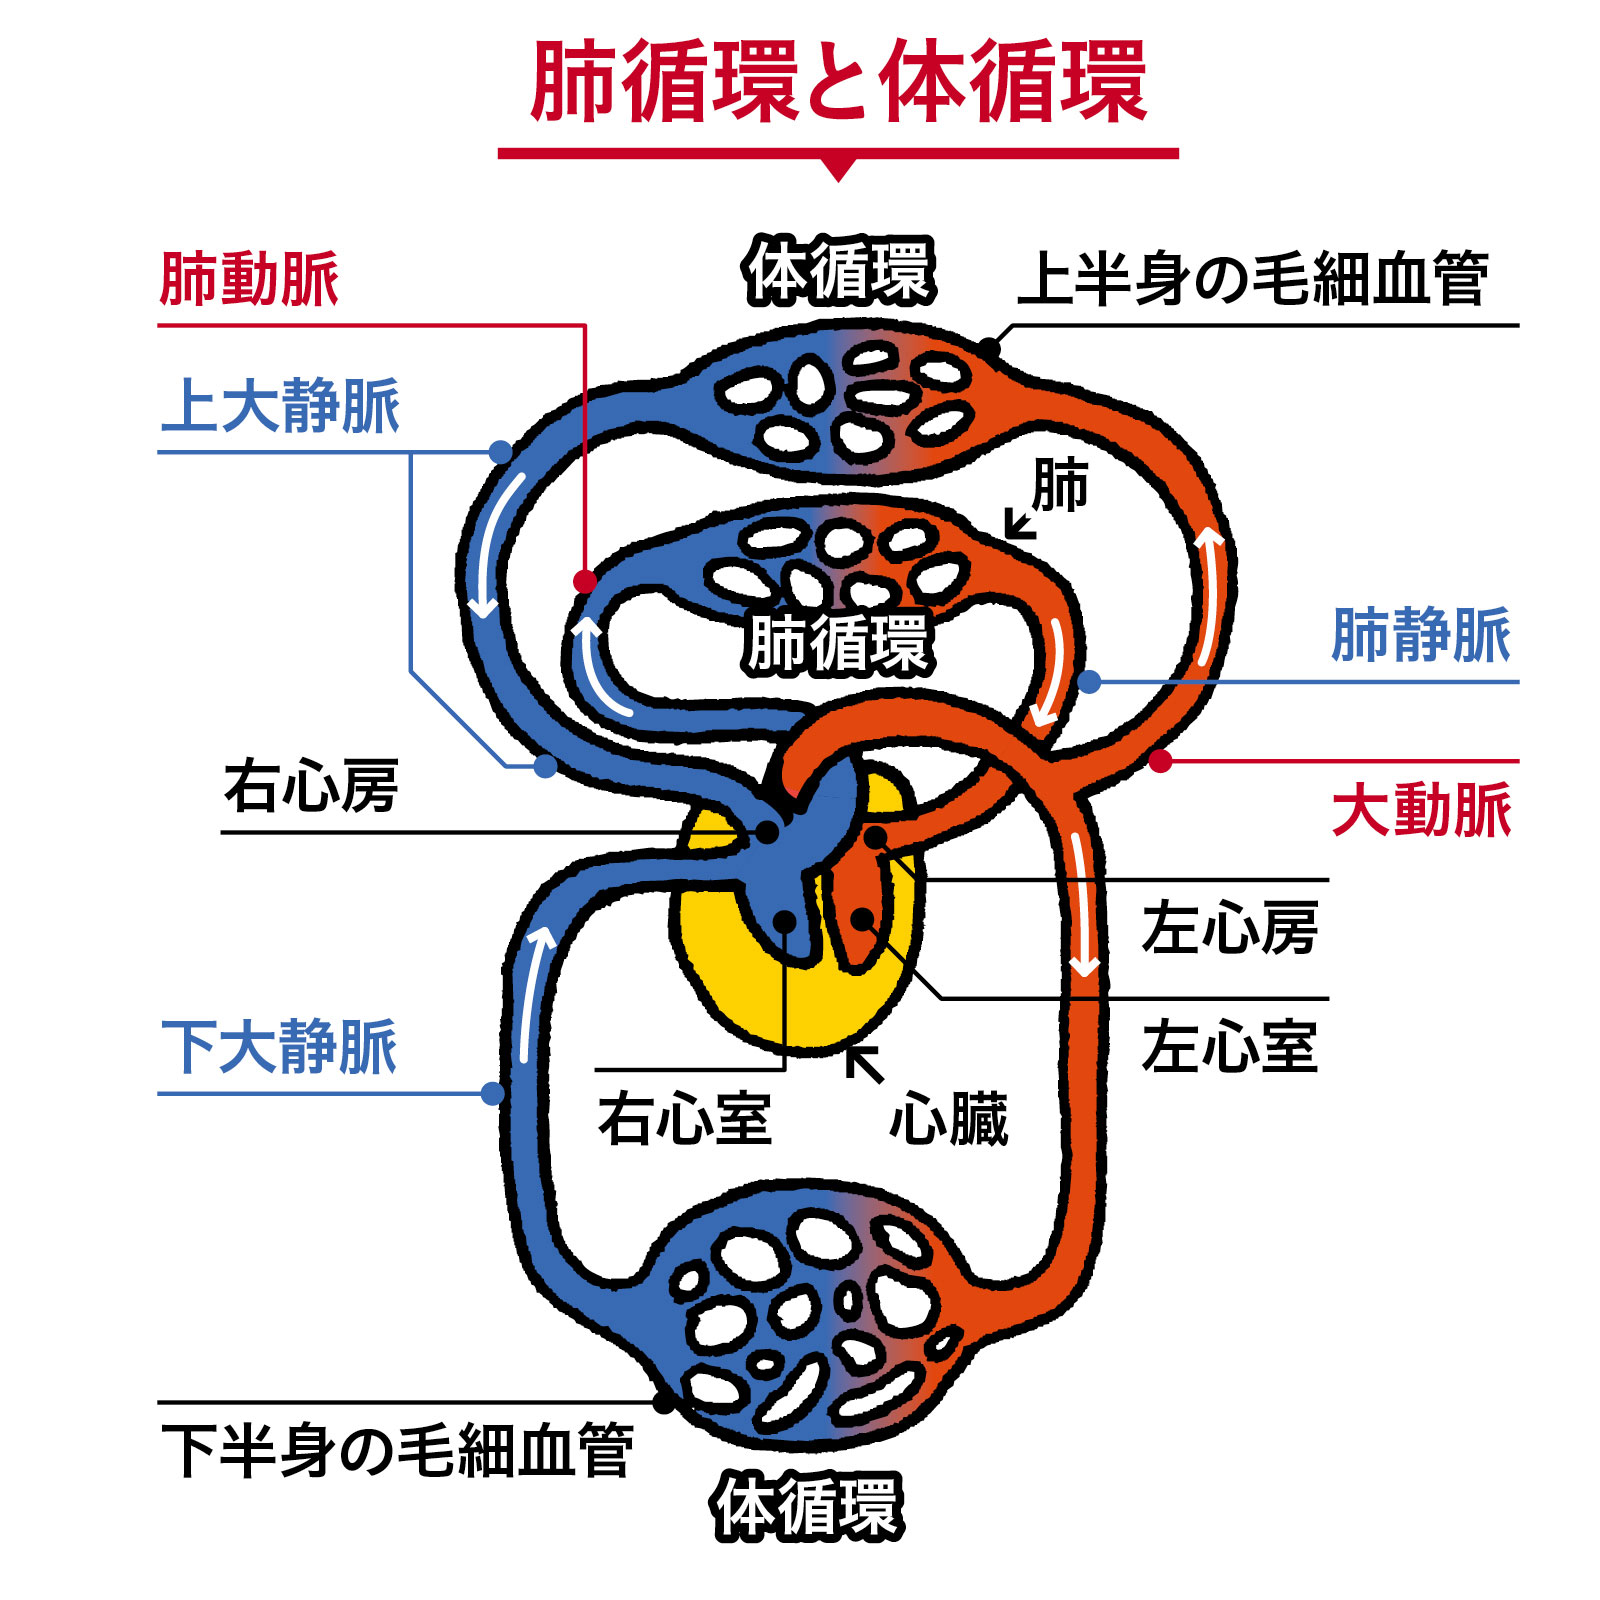 血管系 肺循環と体循環